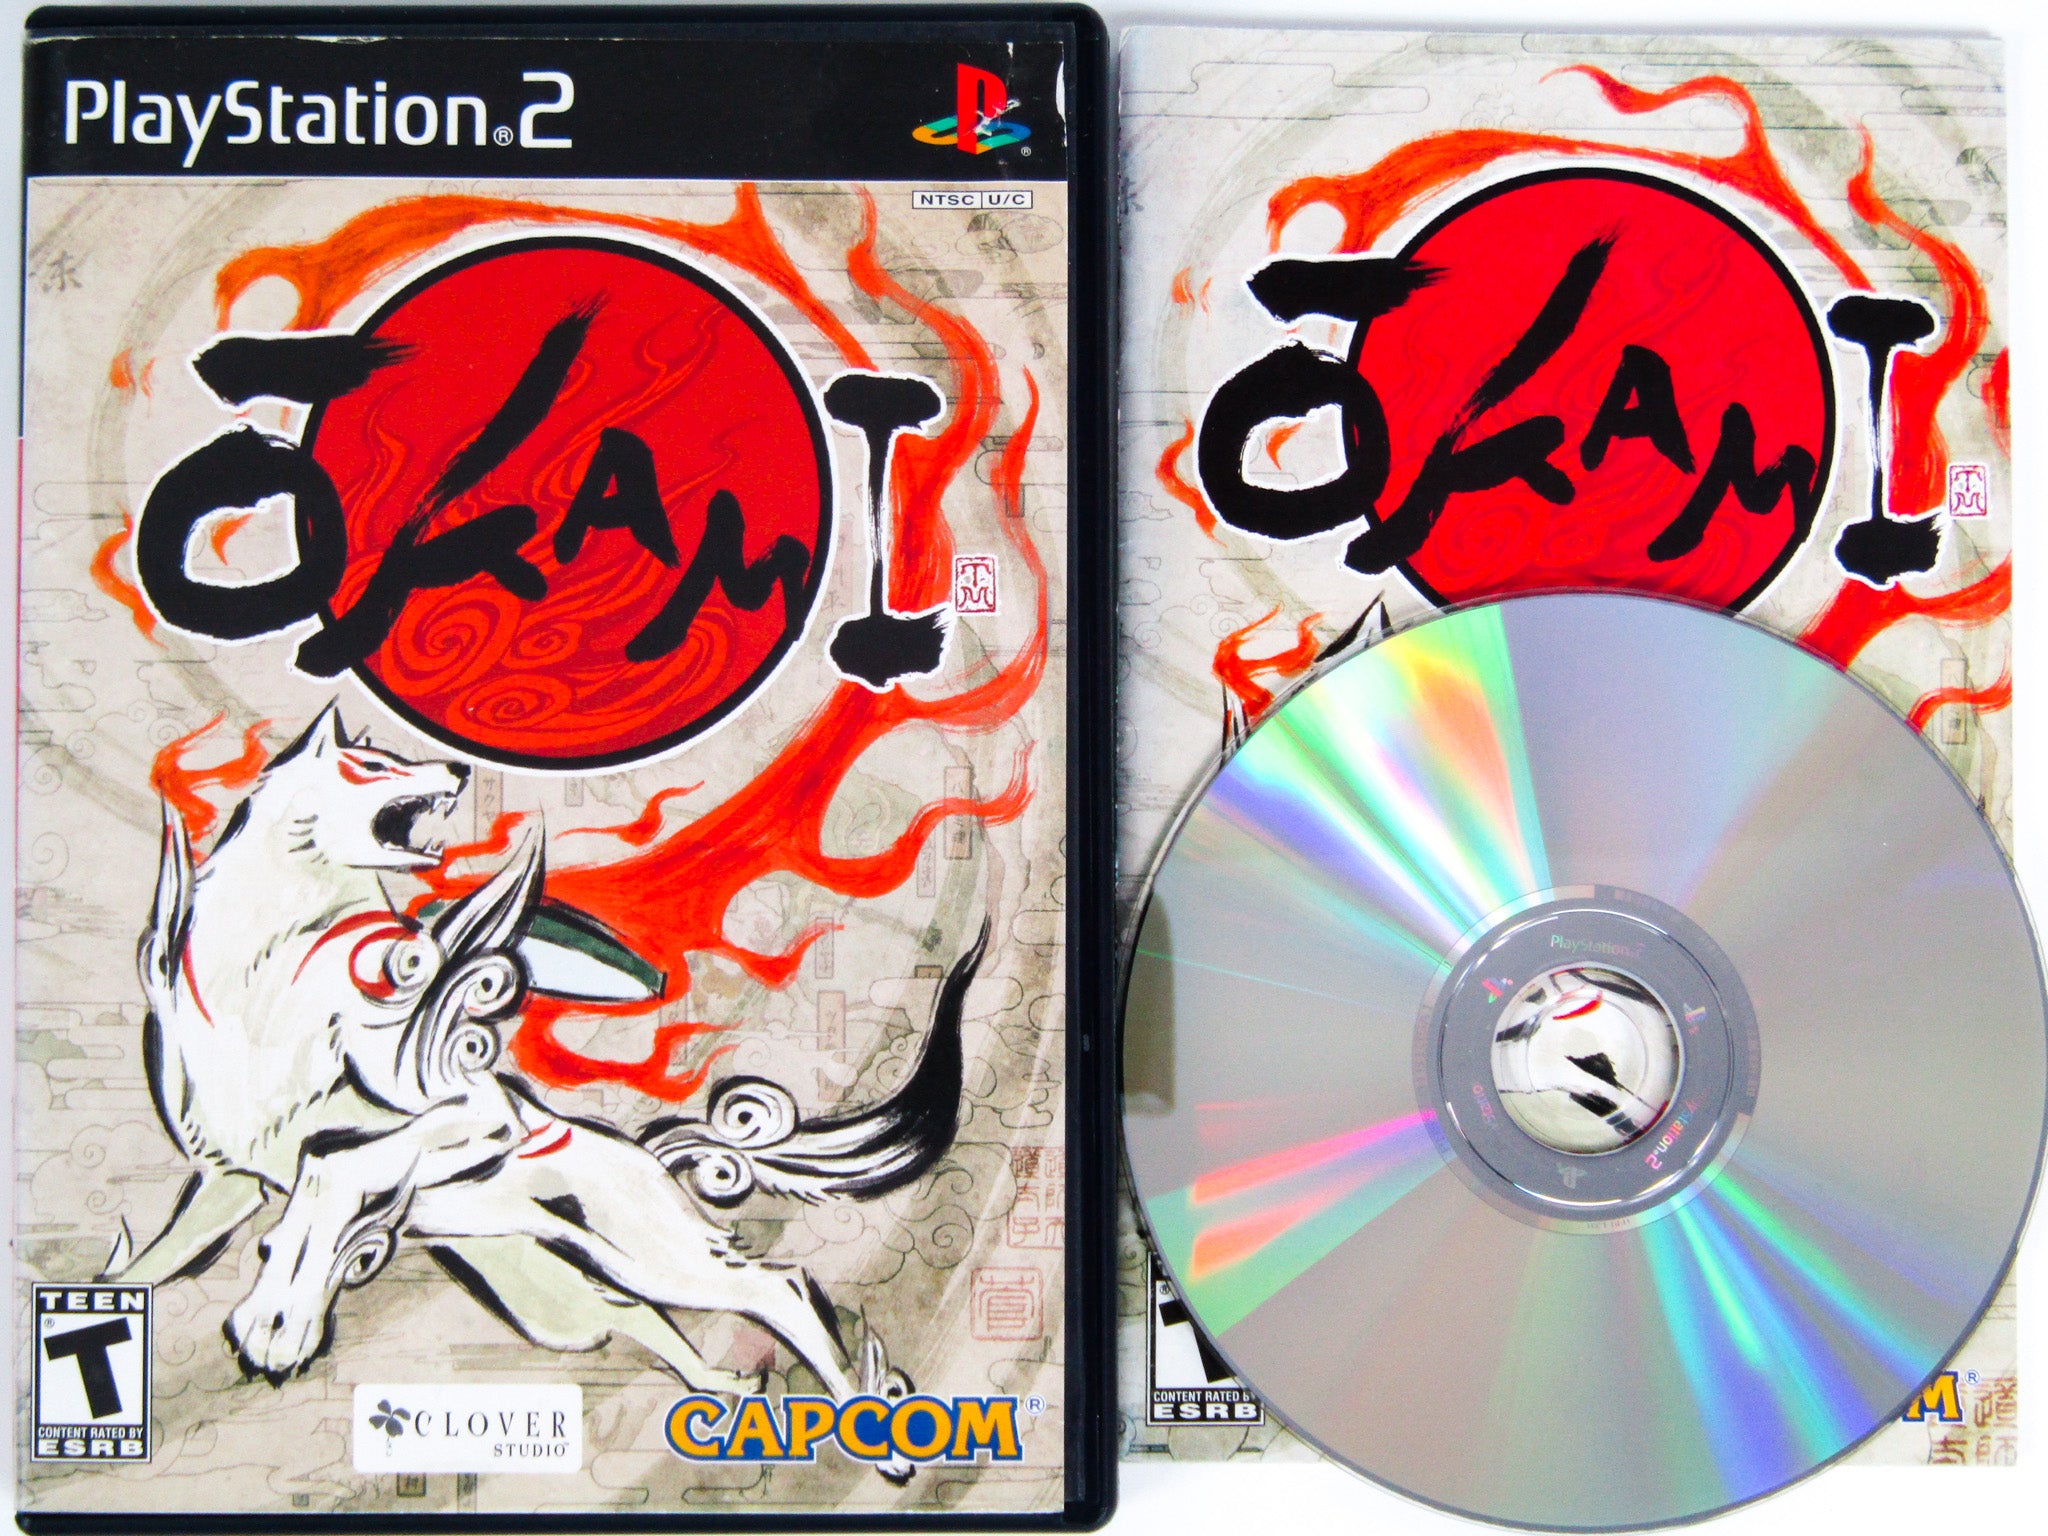 Okami (PlayStation2 the Best) - Solaris Japan